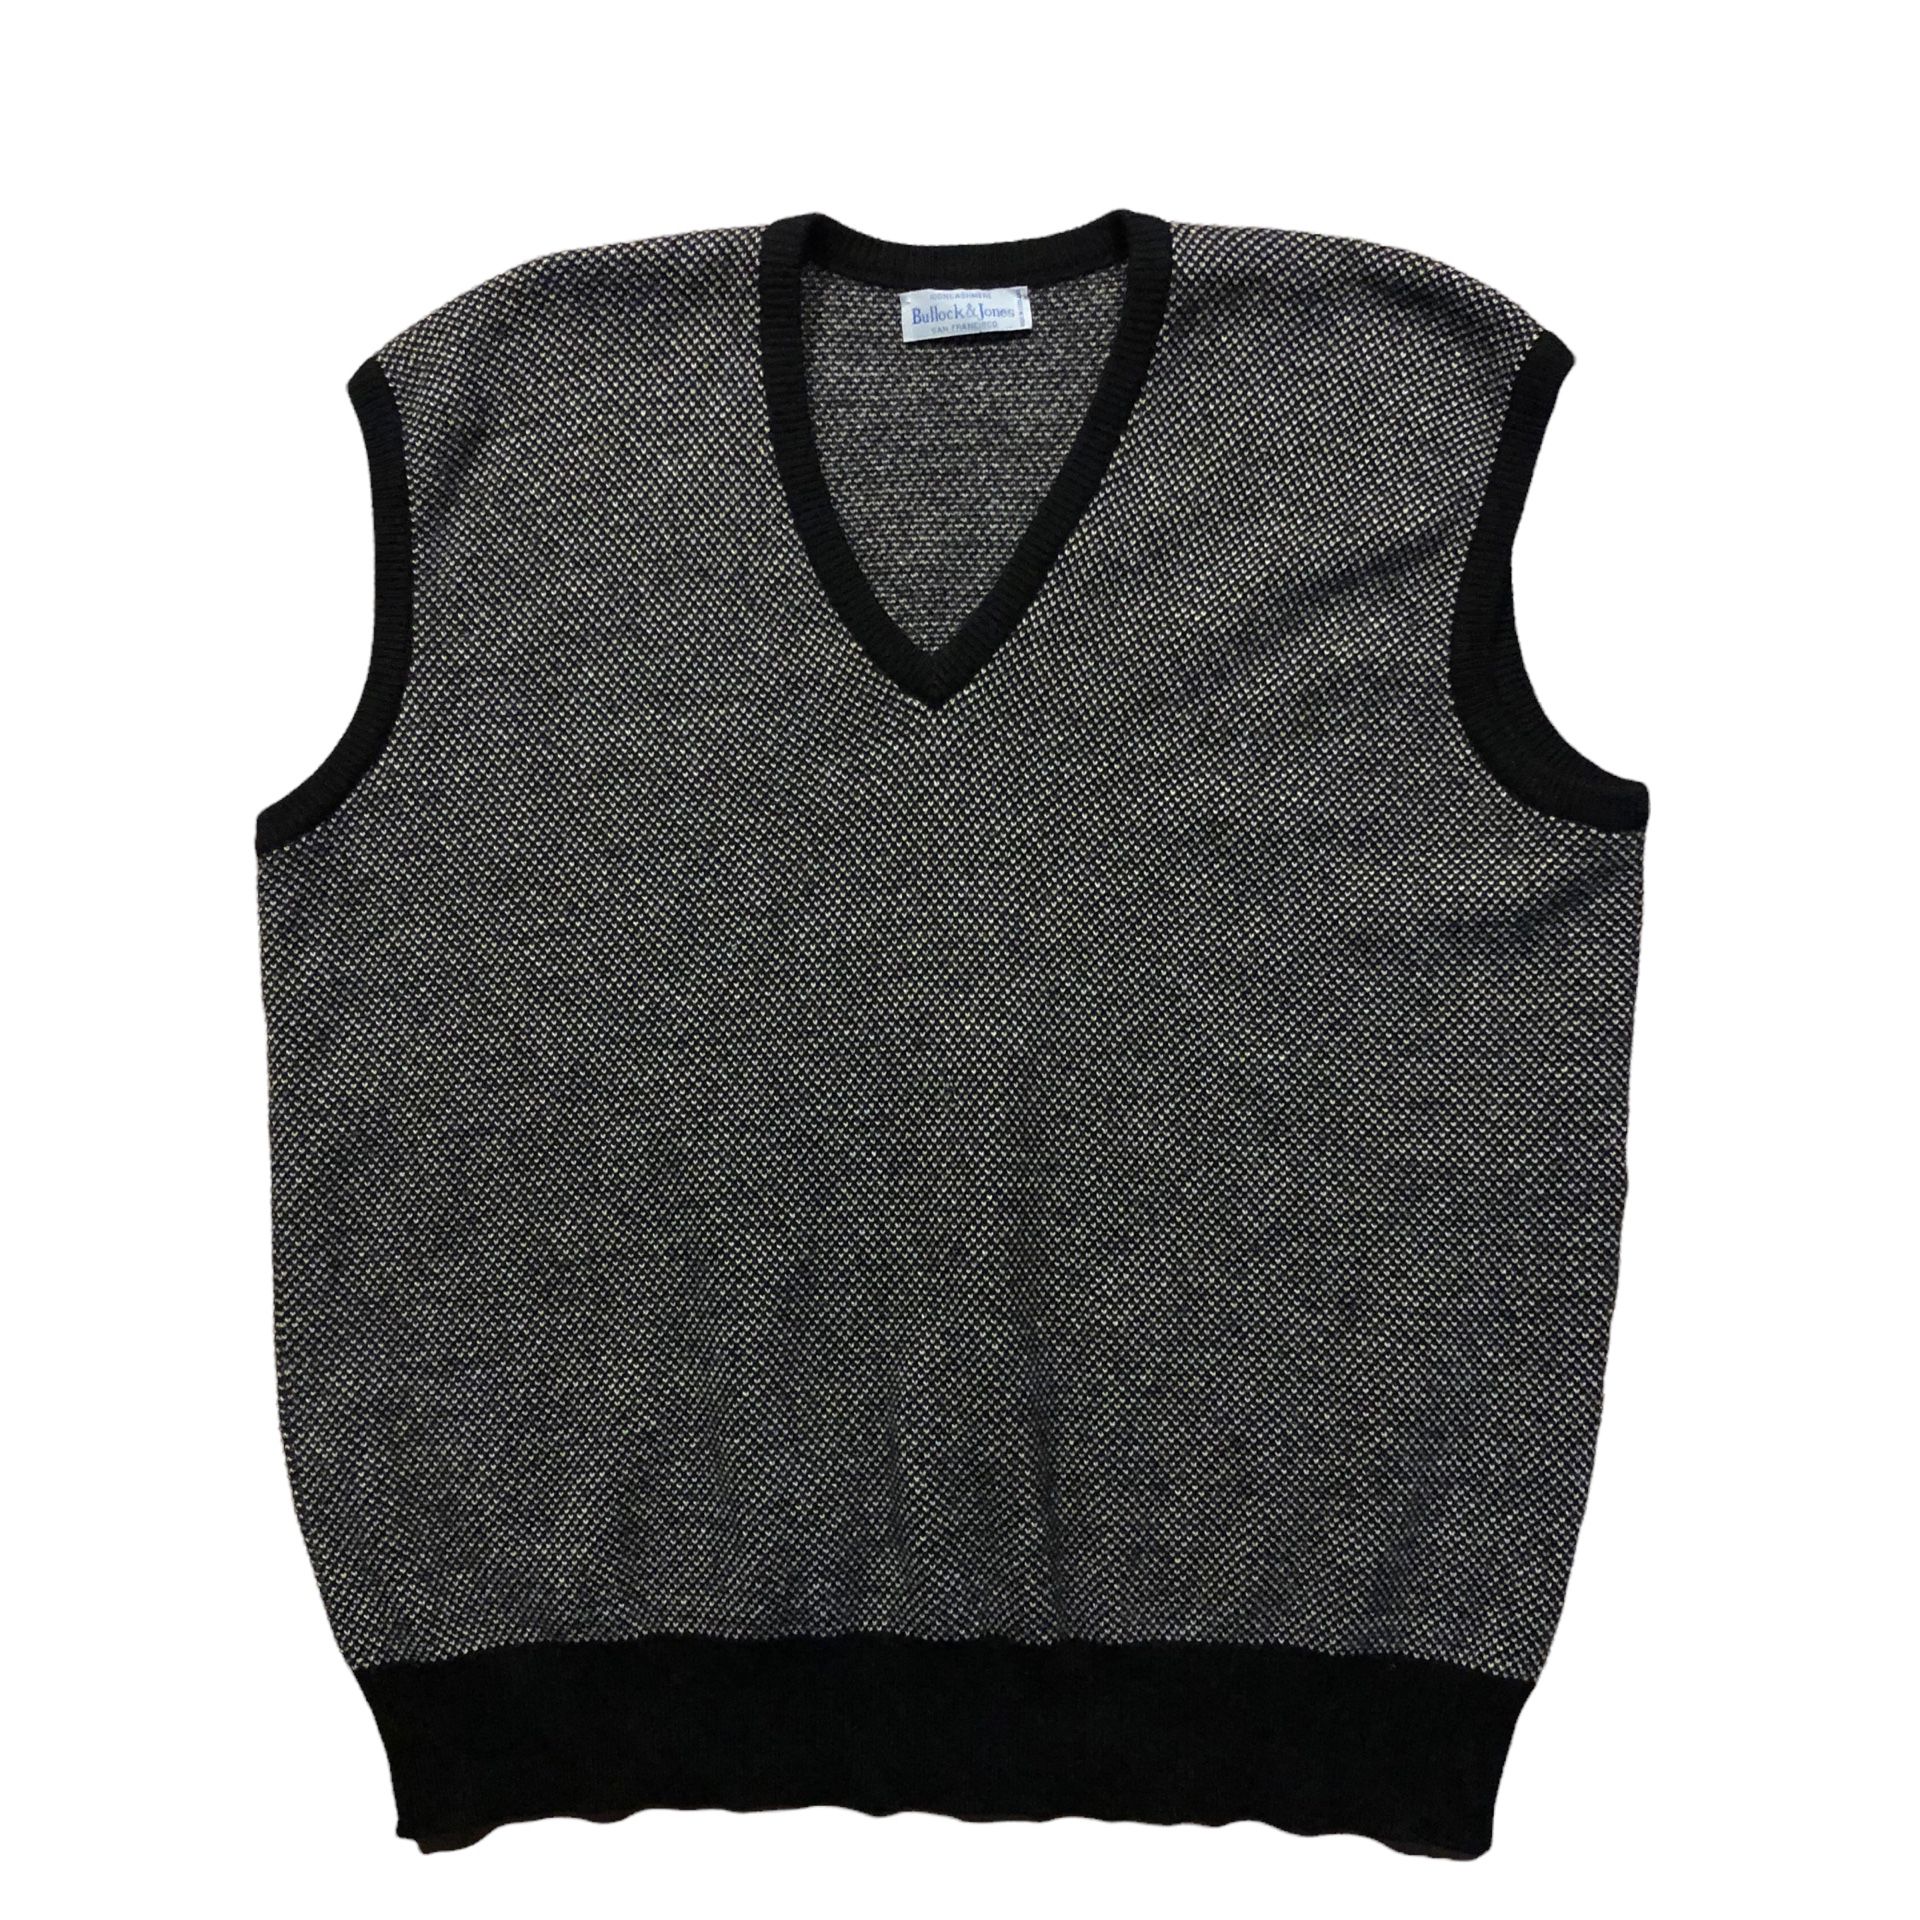 bullock jones sweater vest cashmere gray black size medium/large.